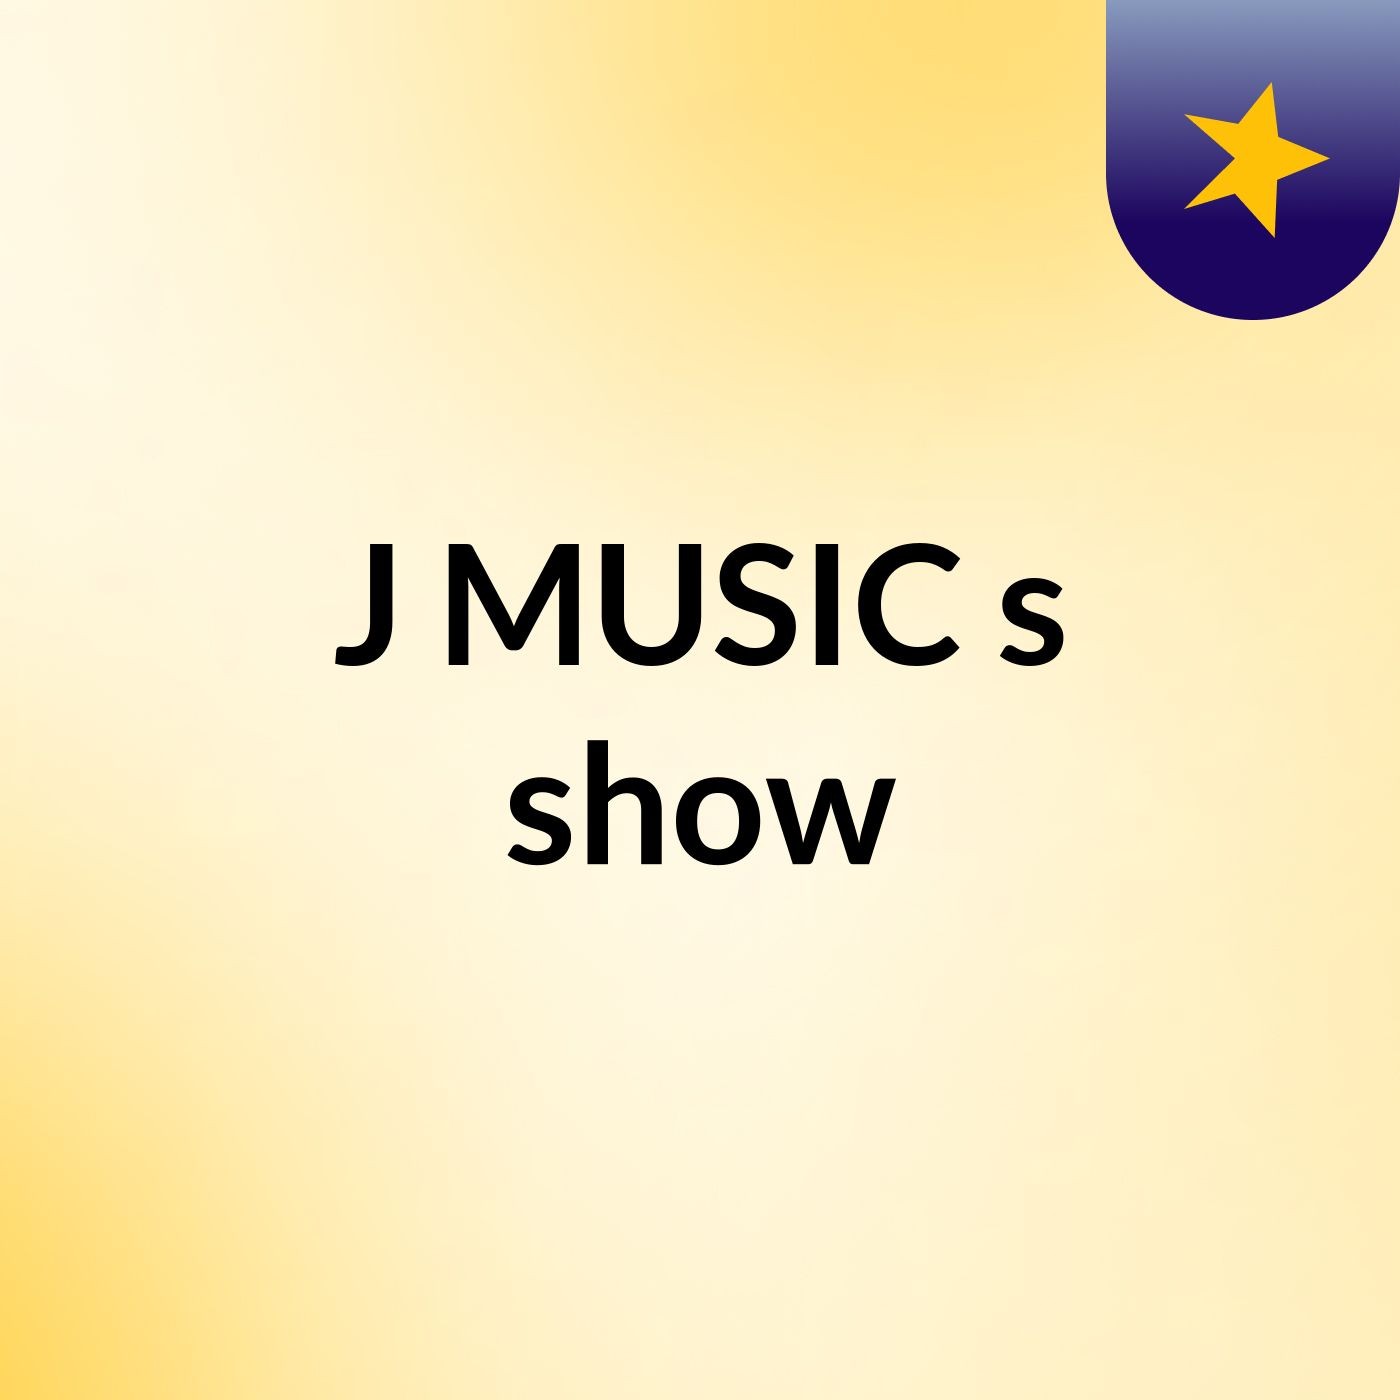 J MUSIC's show